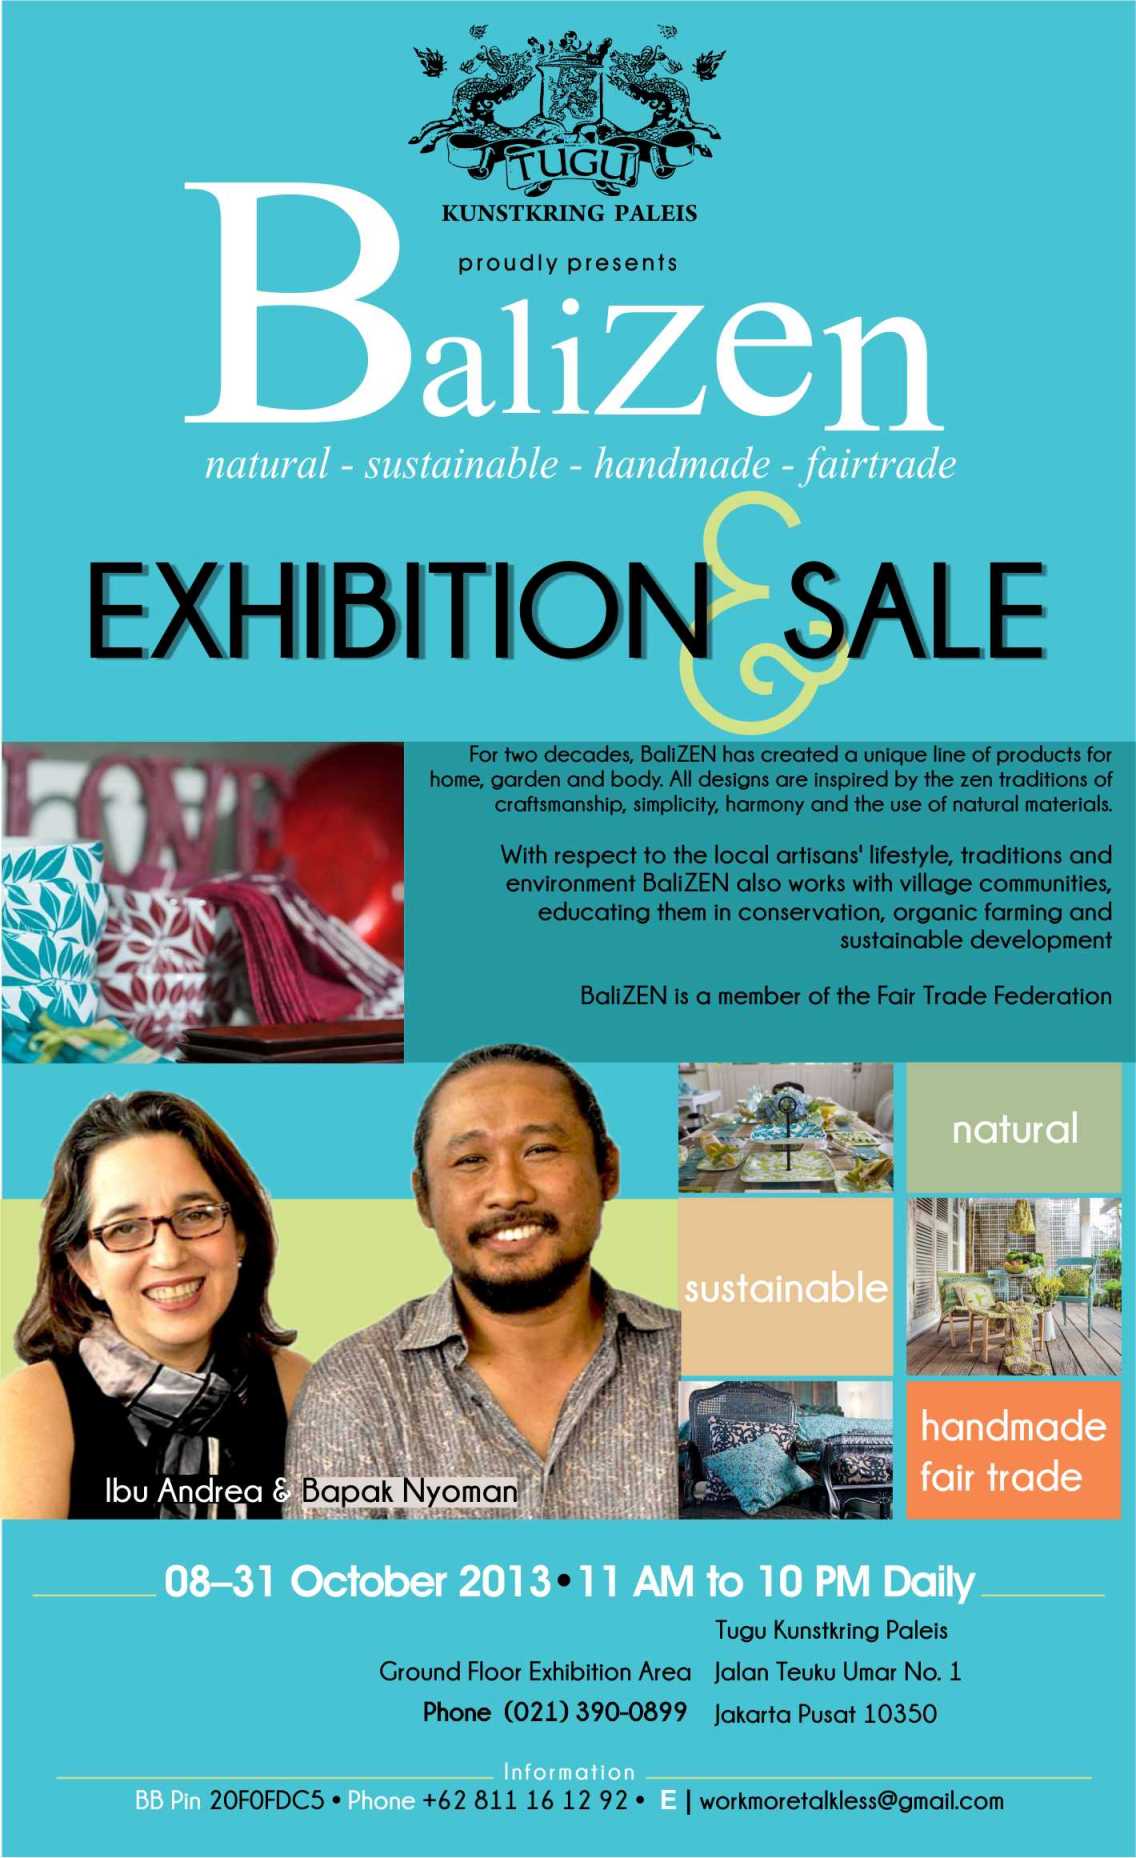 balizen exhibition and sale 08-31 october 2013 at tugu kunstkring paleis